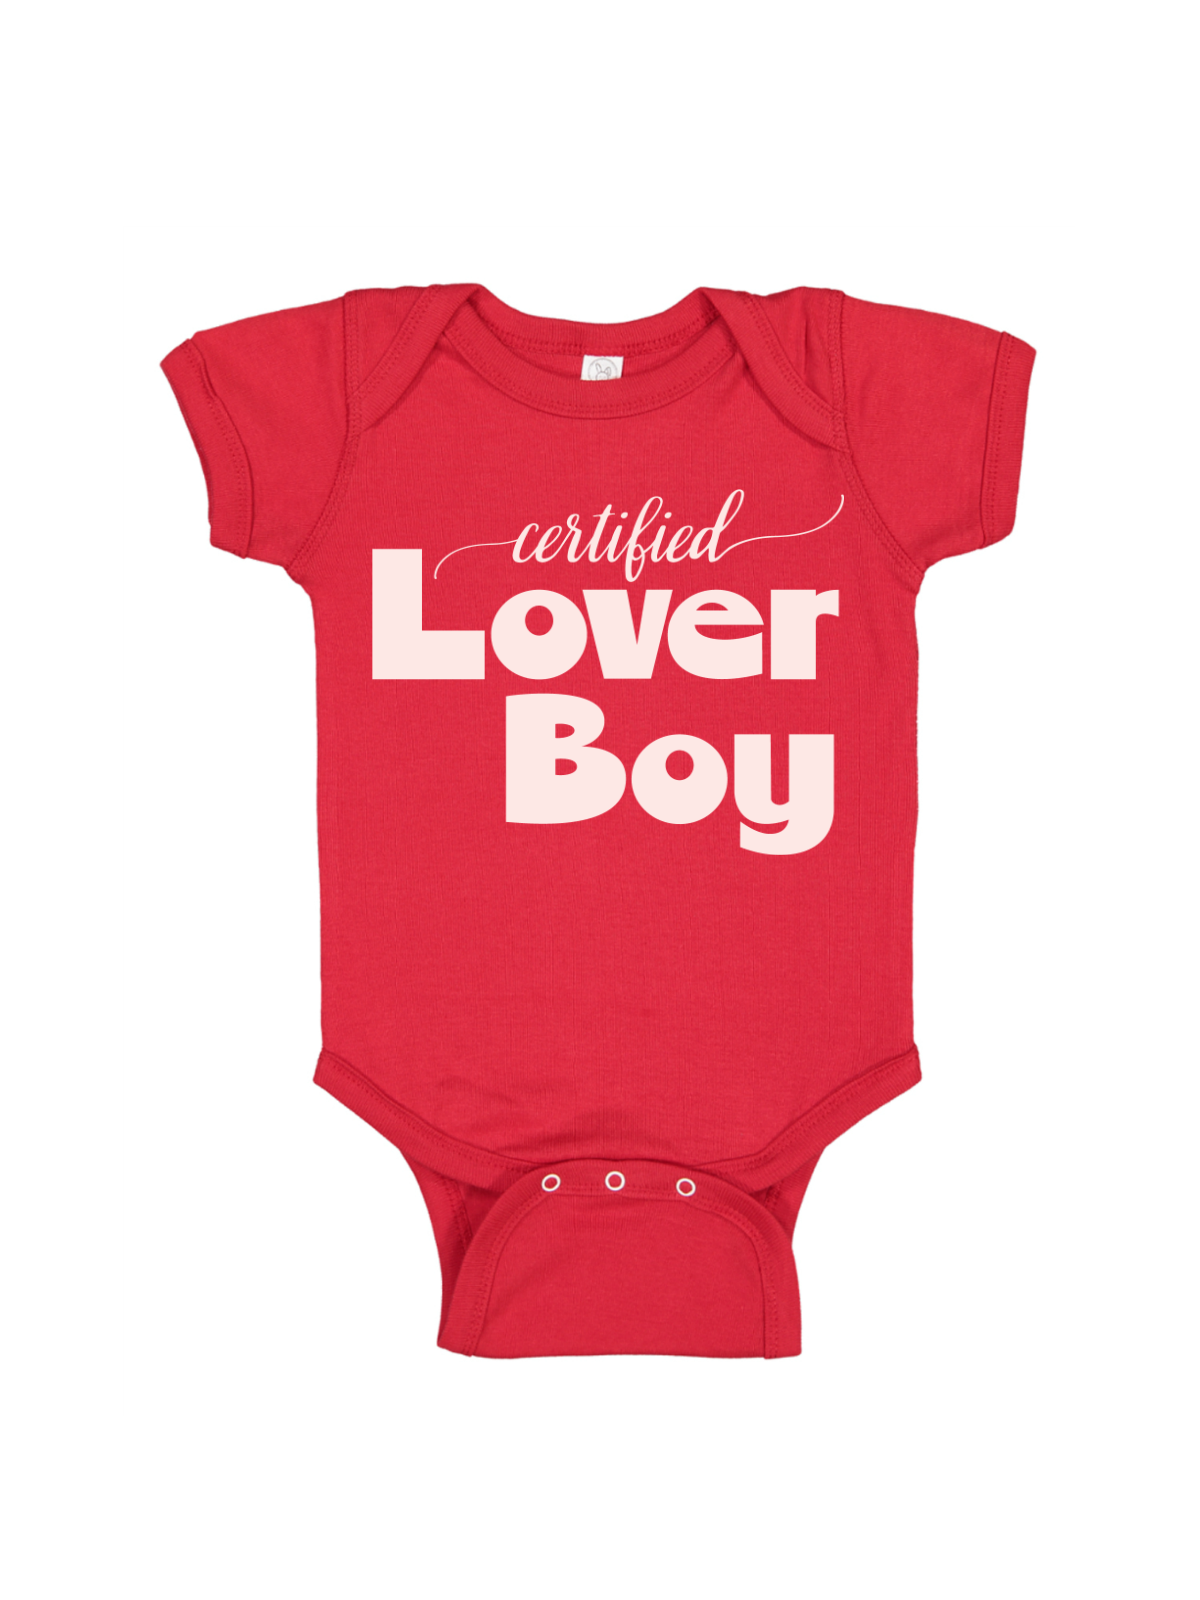 certified lover boy baby bodysuit